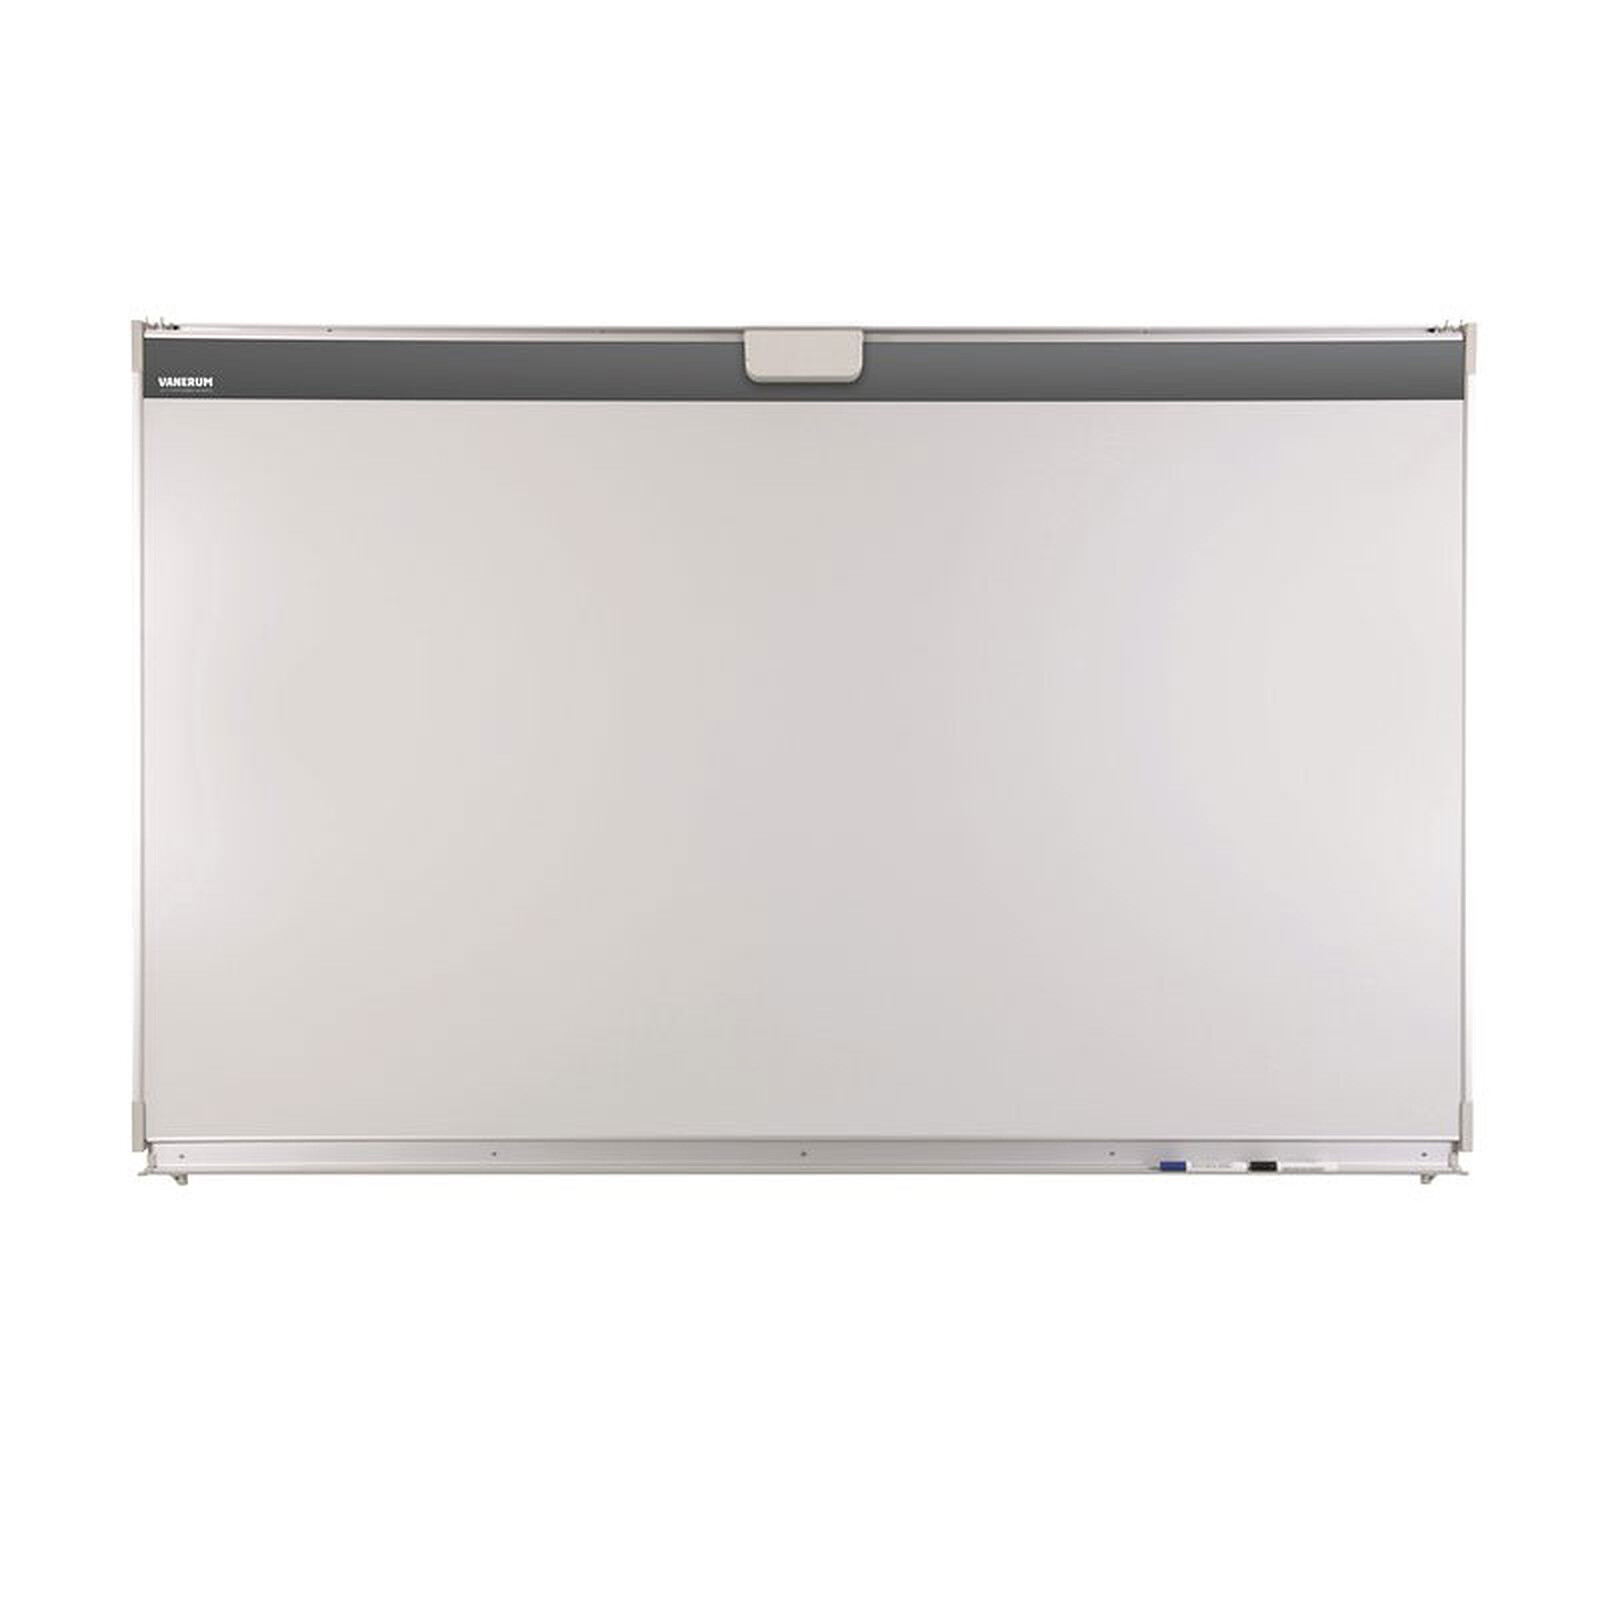 BIC Velleda tableau 60 x 90 cm - Tableau blanc et paperboard - Garantie 3  ans LDLC